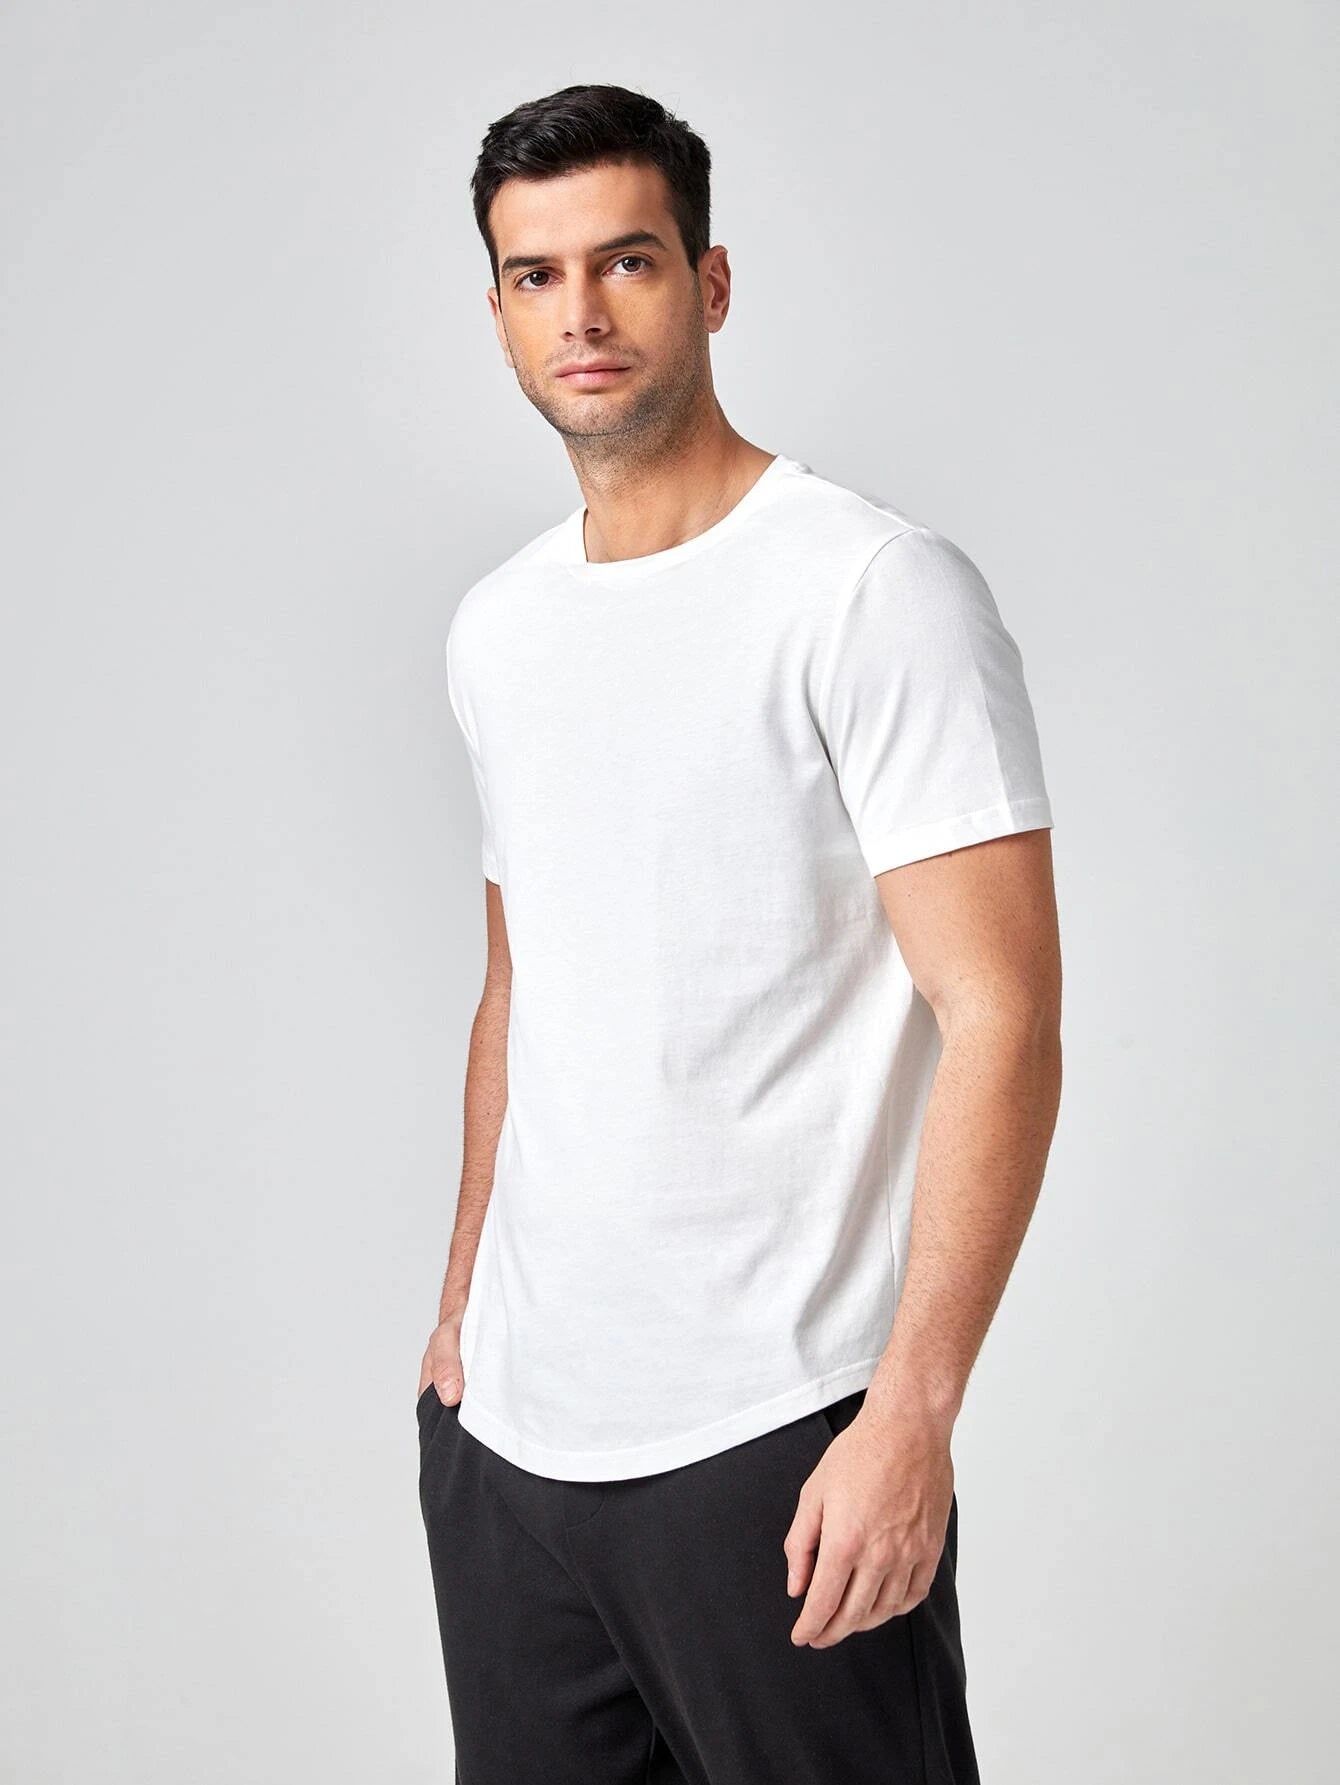 Men's Basic White T-shirt – Wardrobe Your Way